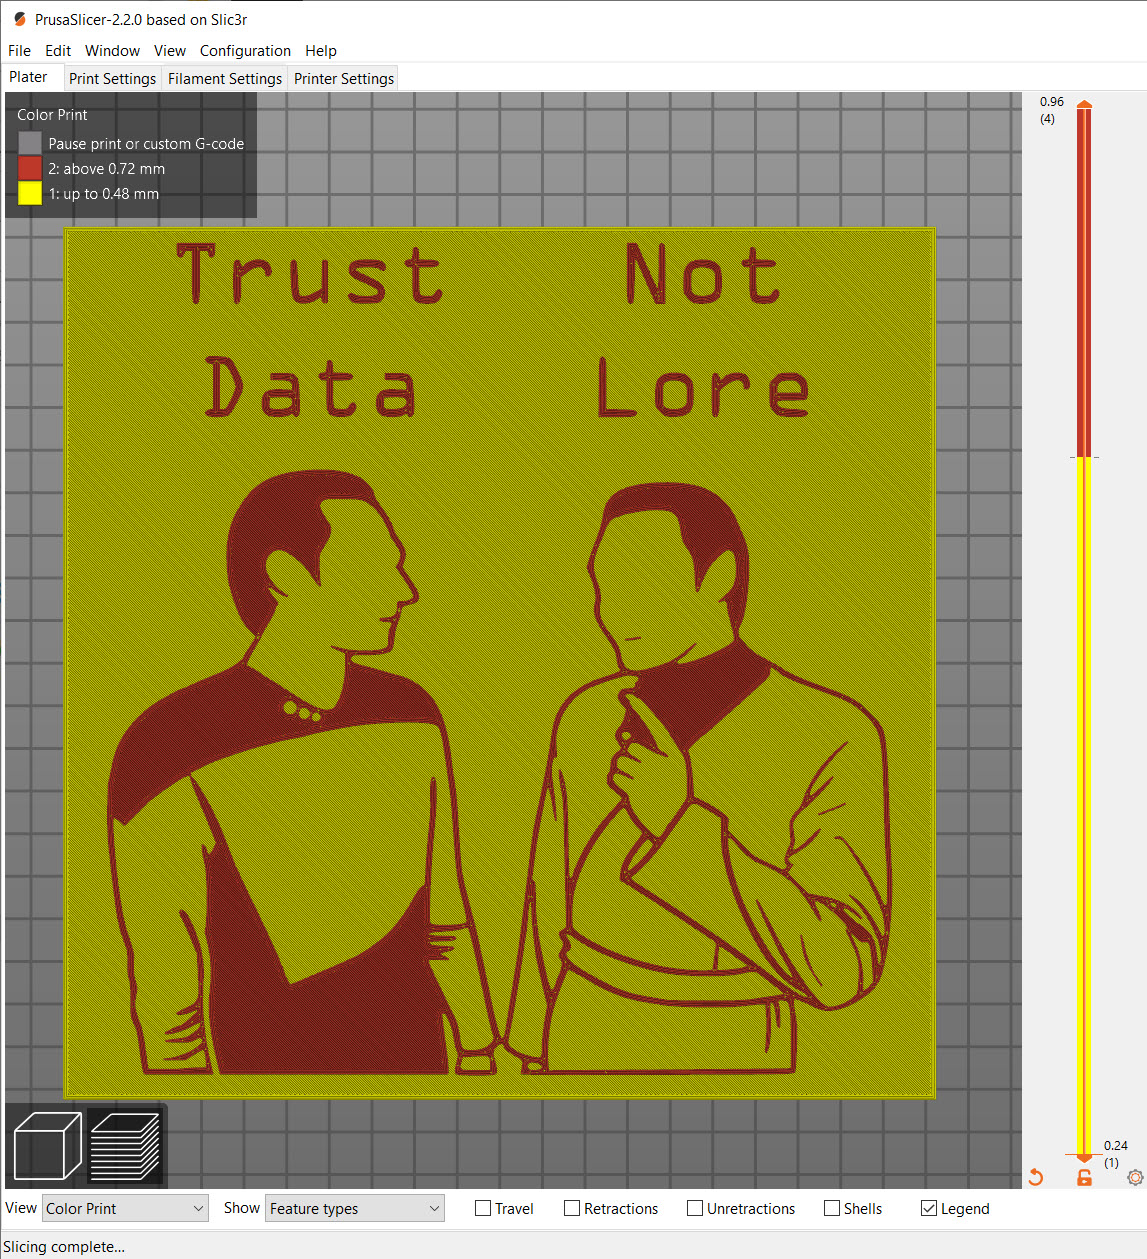 Trust Data Not Lore